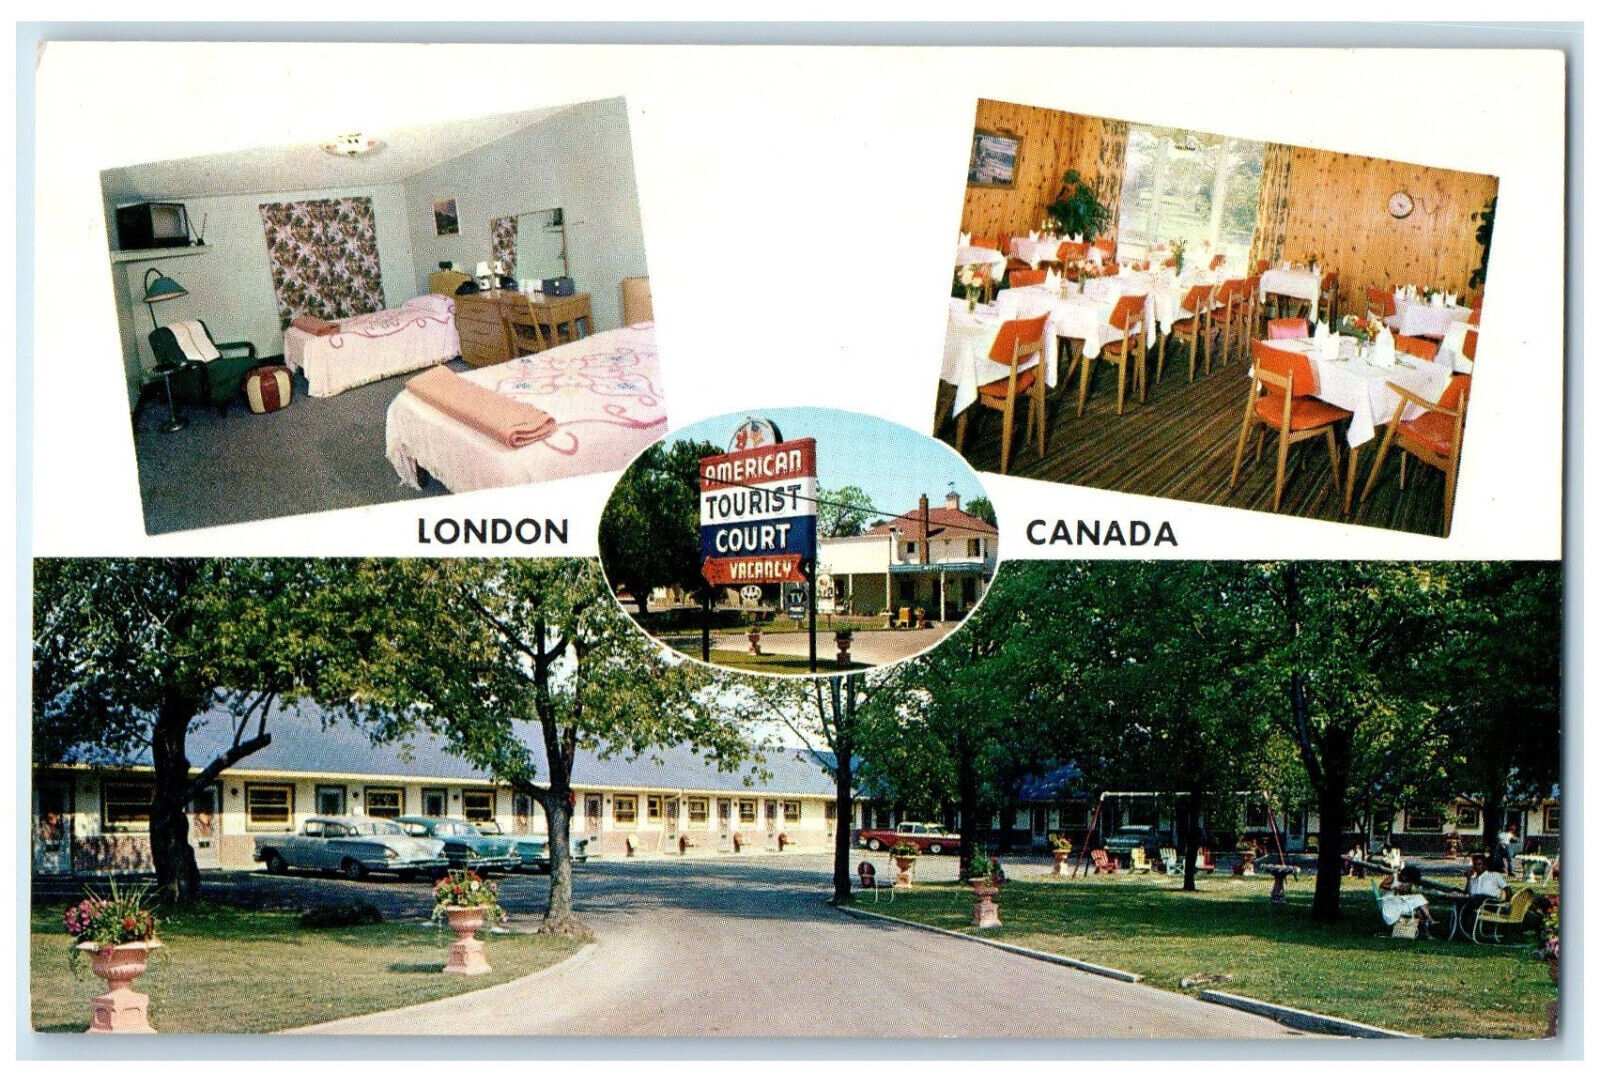 c1960's American Tourist Court London Ontario Canada Multiview Vintage Postcard